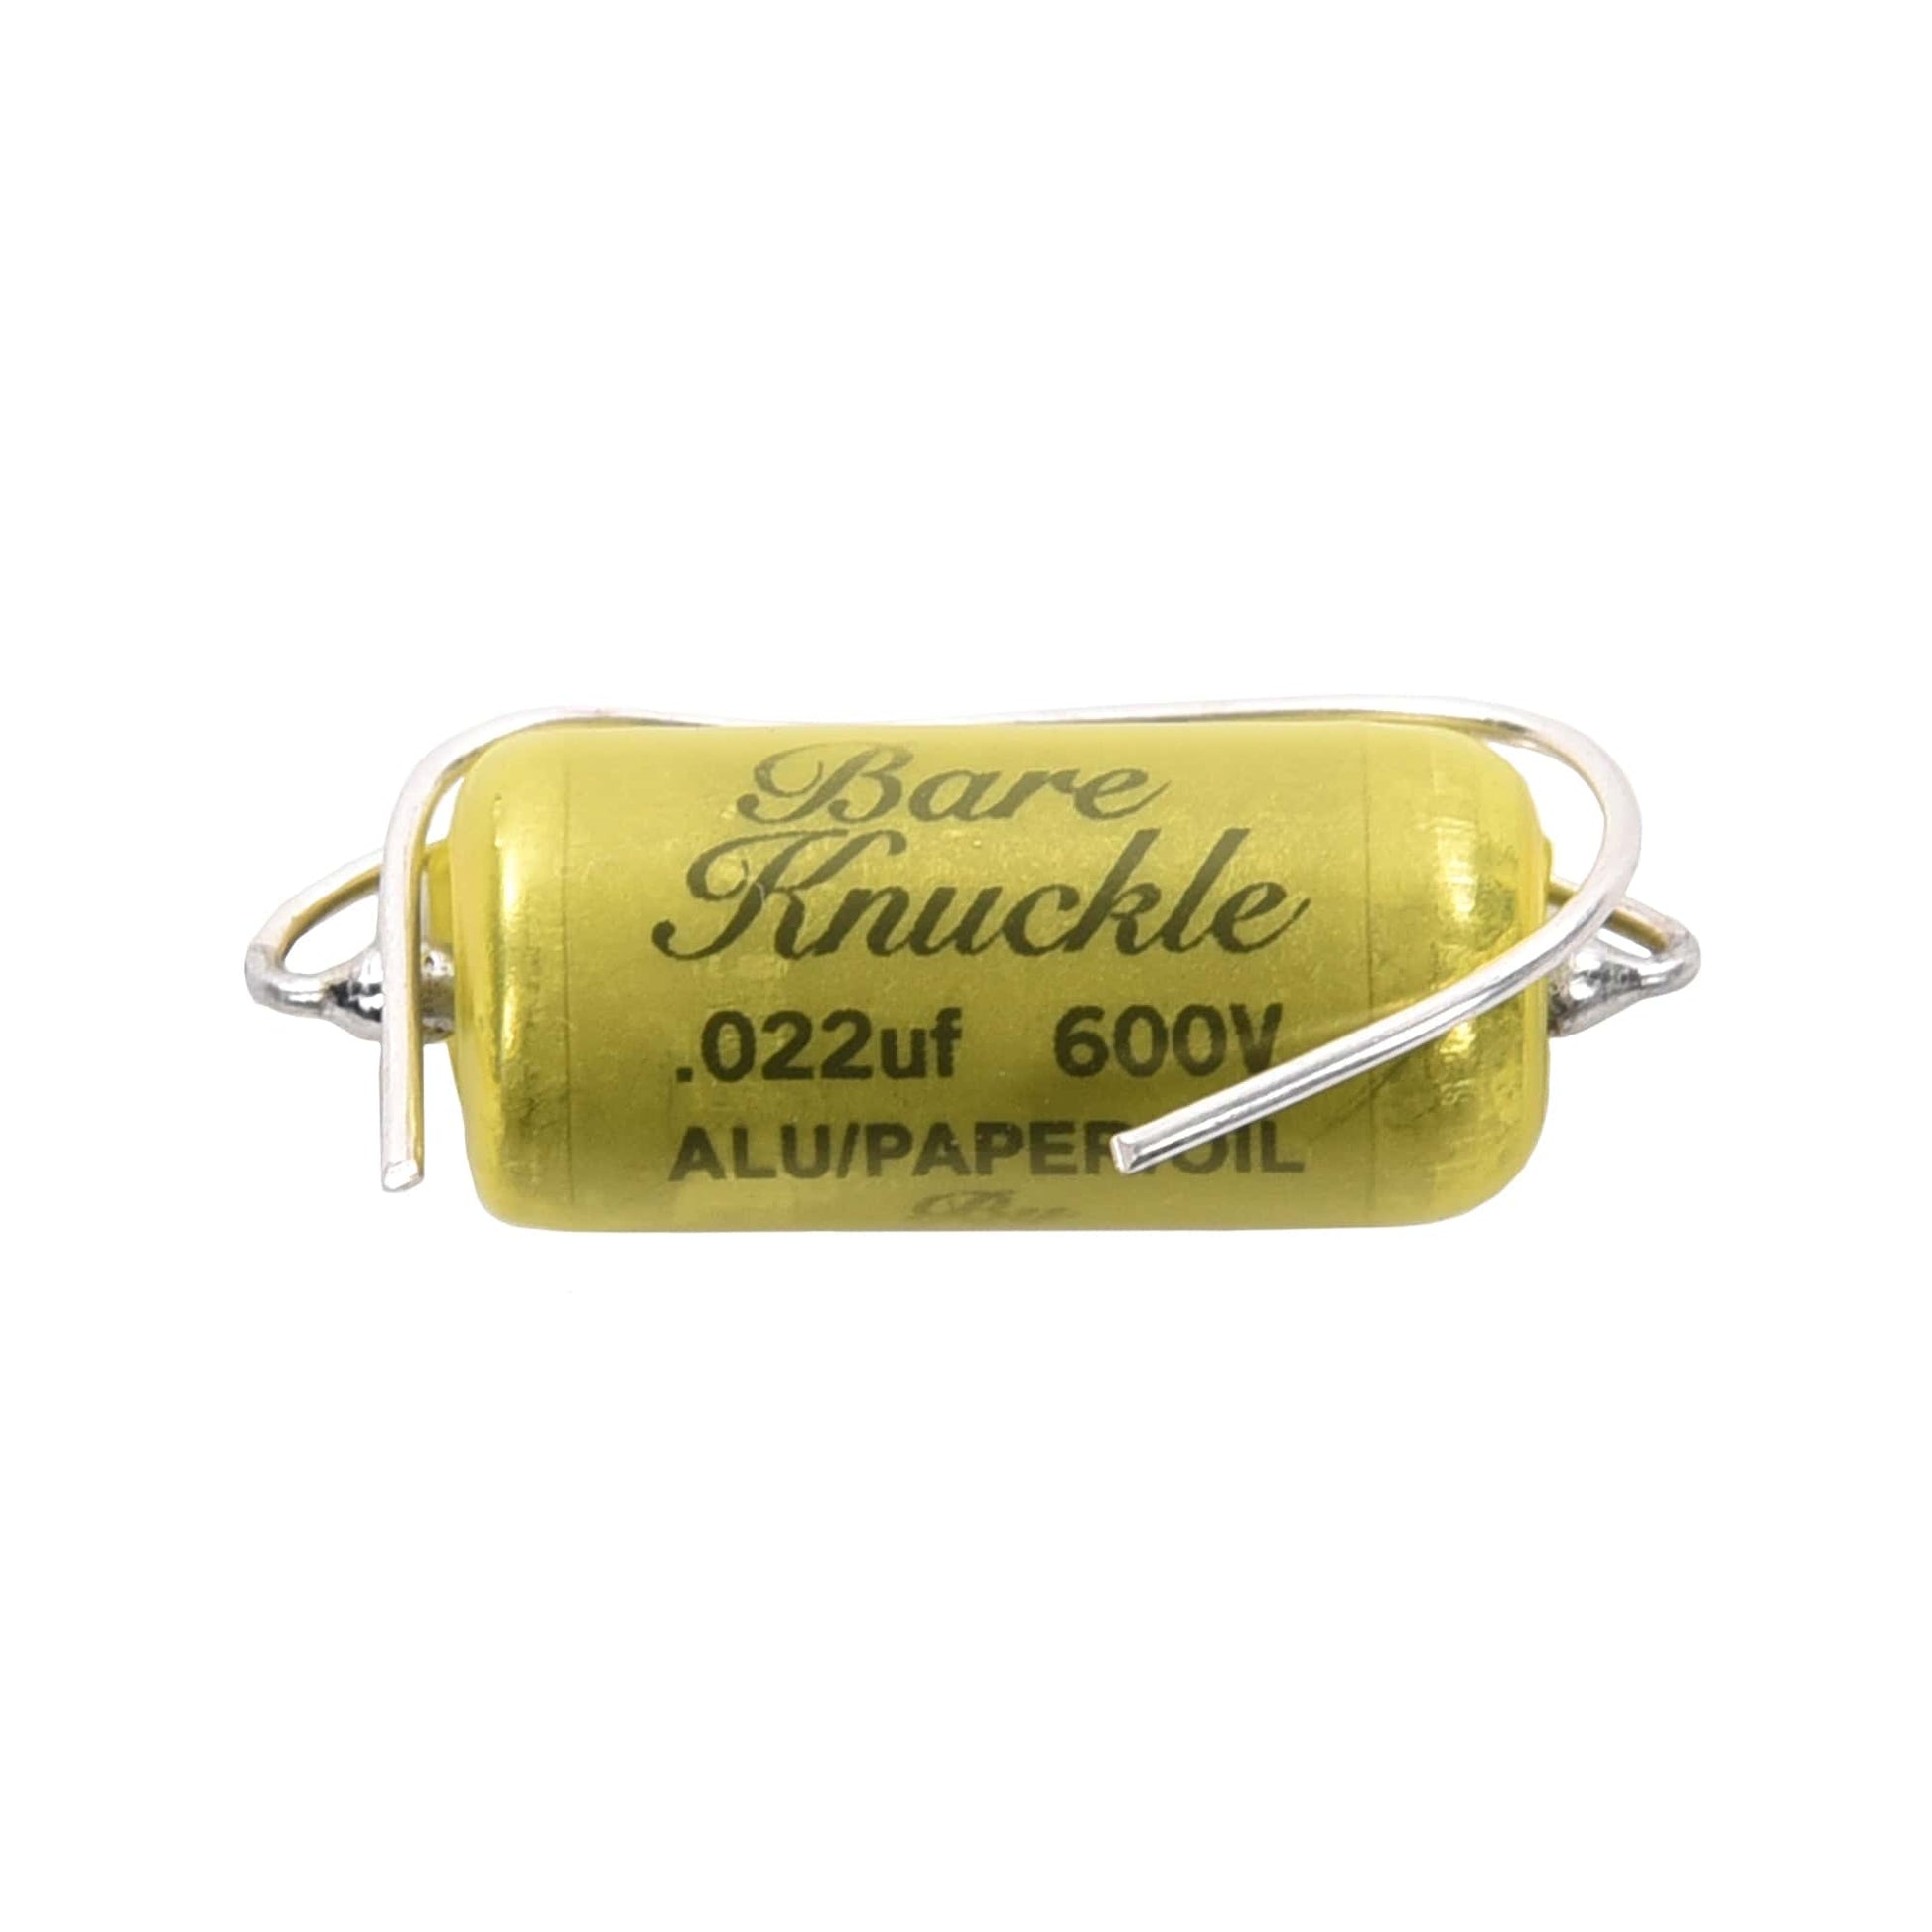 Bare Knuckle / Jupiter Premium Paper In Oil Tone Capacitor Mineral Oil 0.022µF Parts / Amp Parts